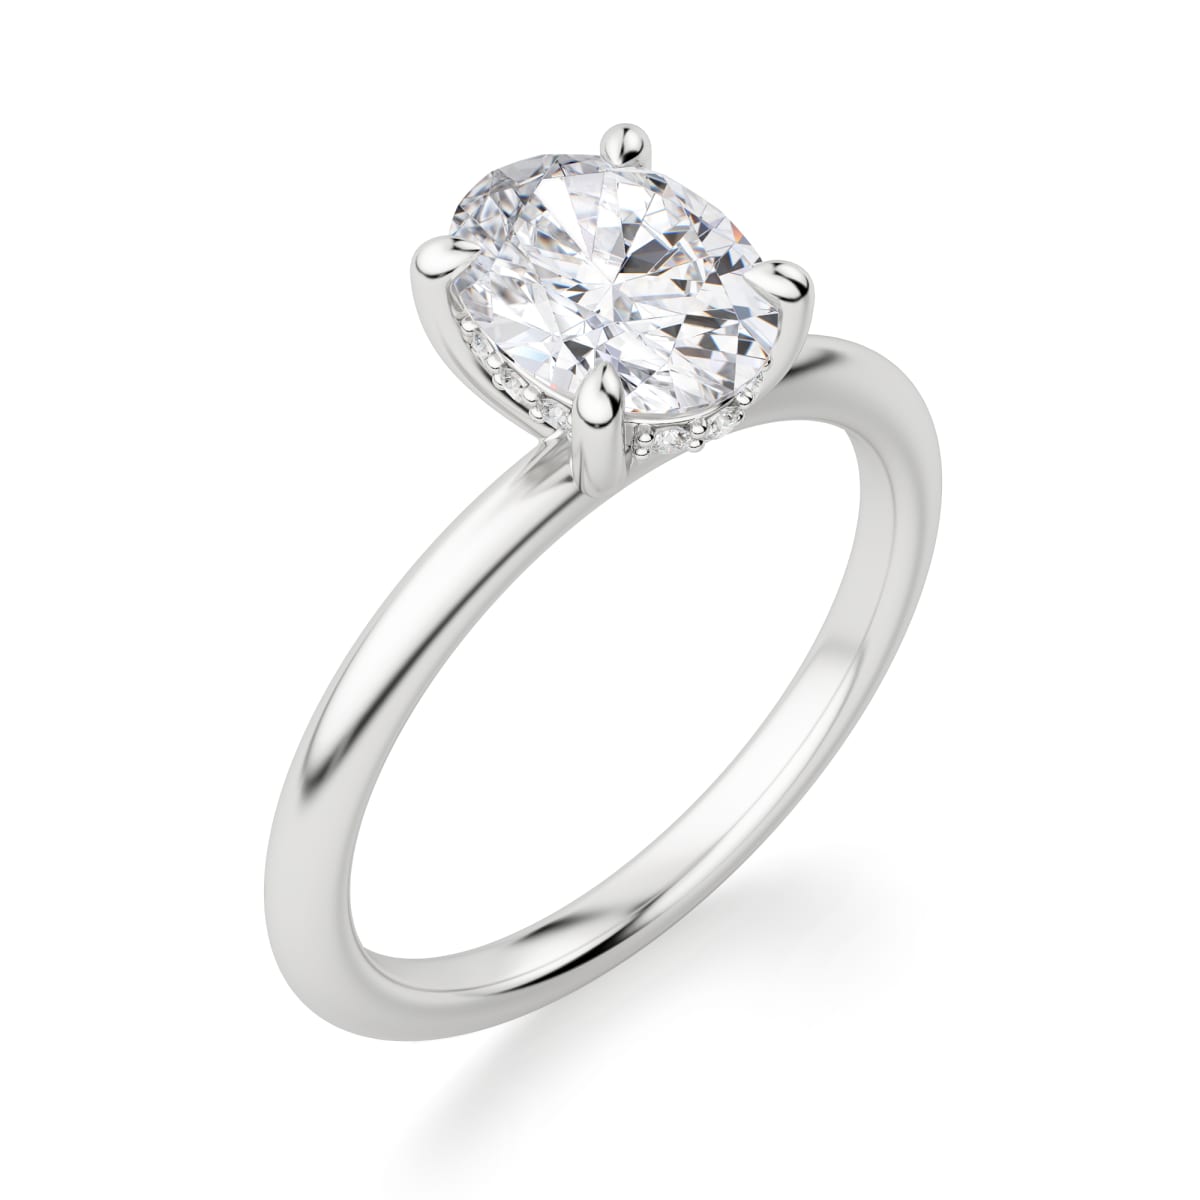 Hidden Halo Classic Engagement Ring With 1.50 ct Oval Center DEW, Ring Size 6.25, Platinum, Nexus Diamond Alternative